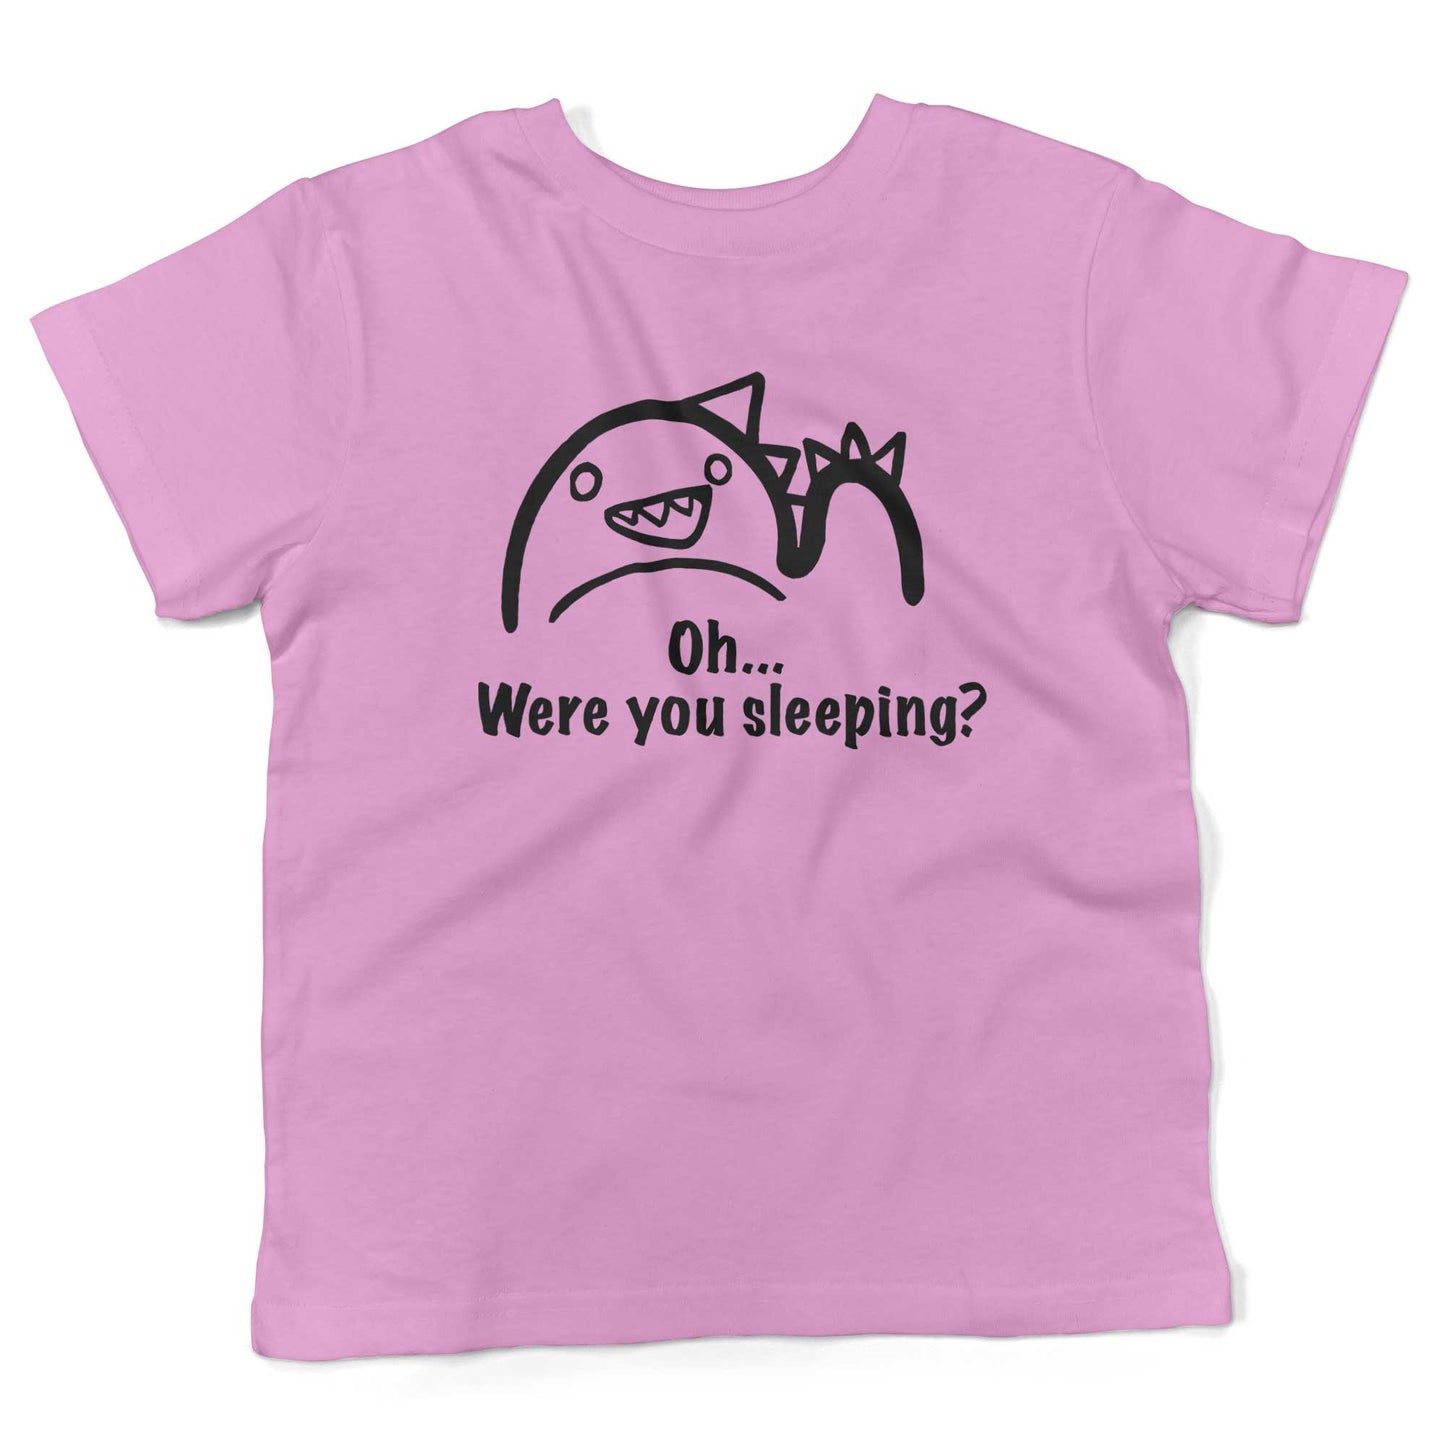 Oh...Were you sleeping? Toddler Shirt-Organic Pink-2T